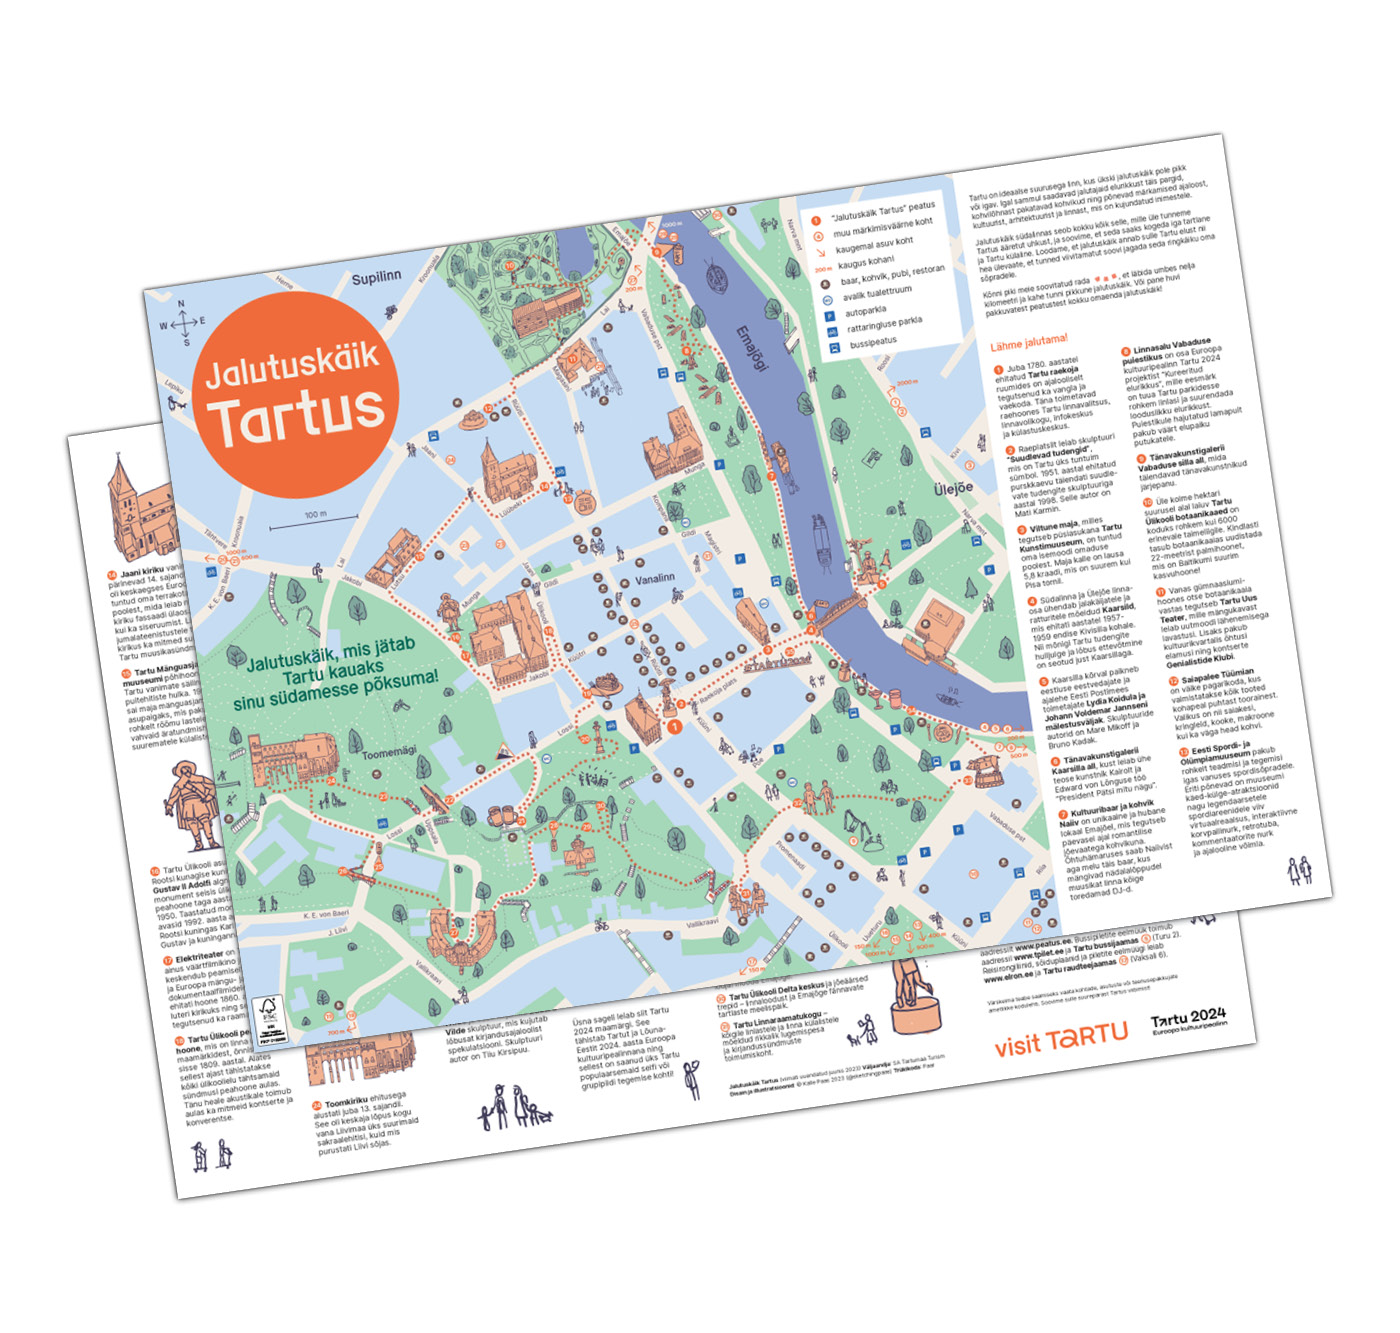 Illustrating and designing ‘A Walk in Tartu’ map